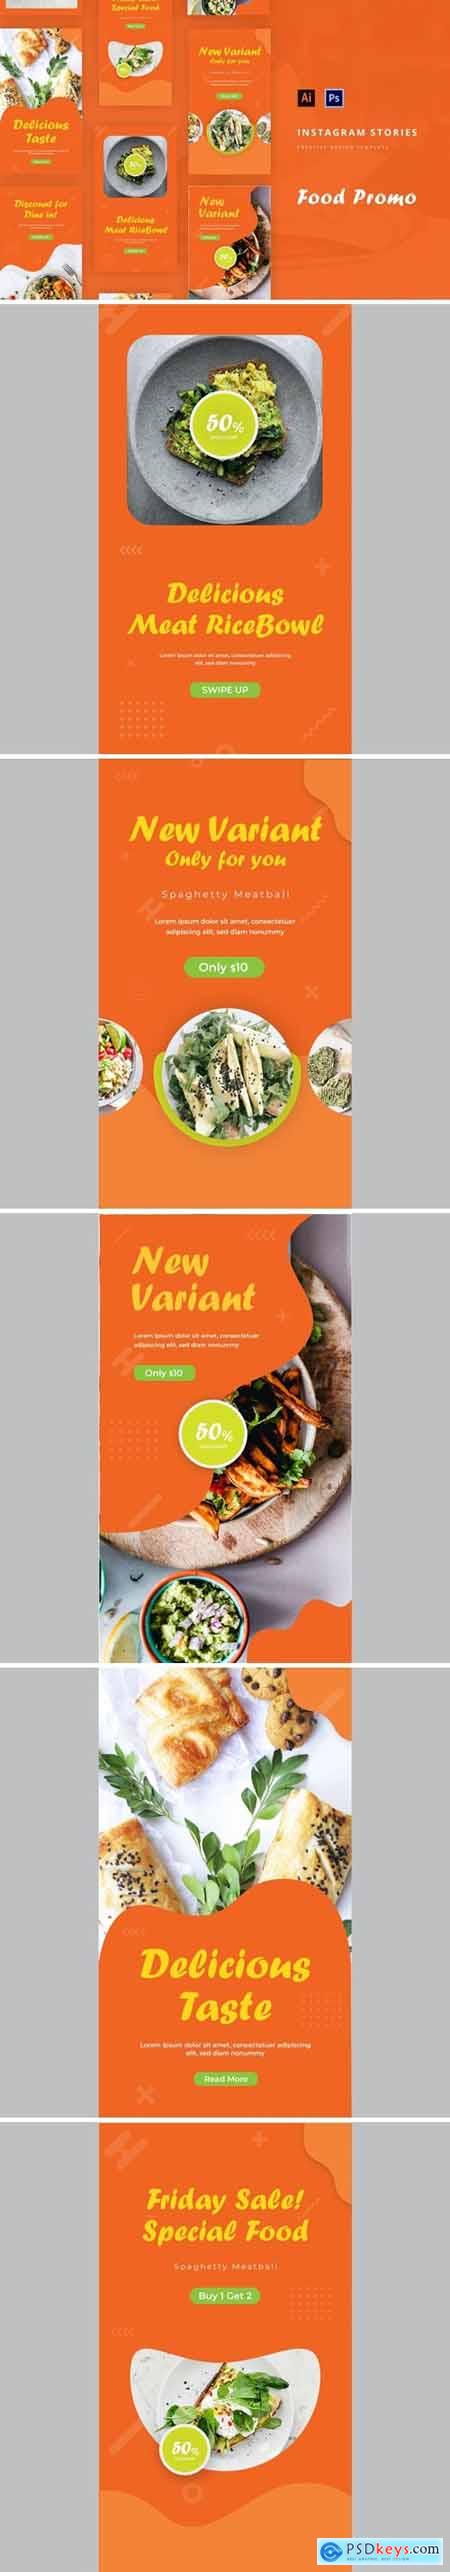 Food Promo Instagram Story